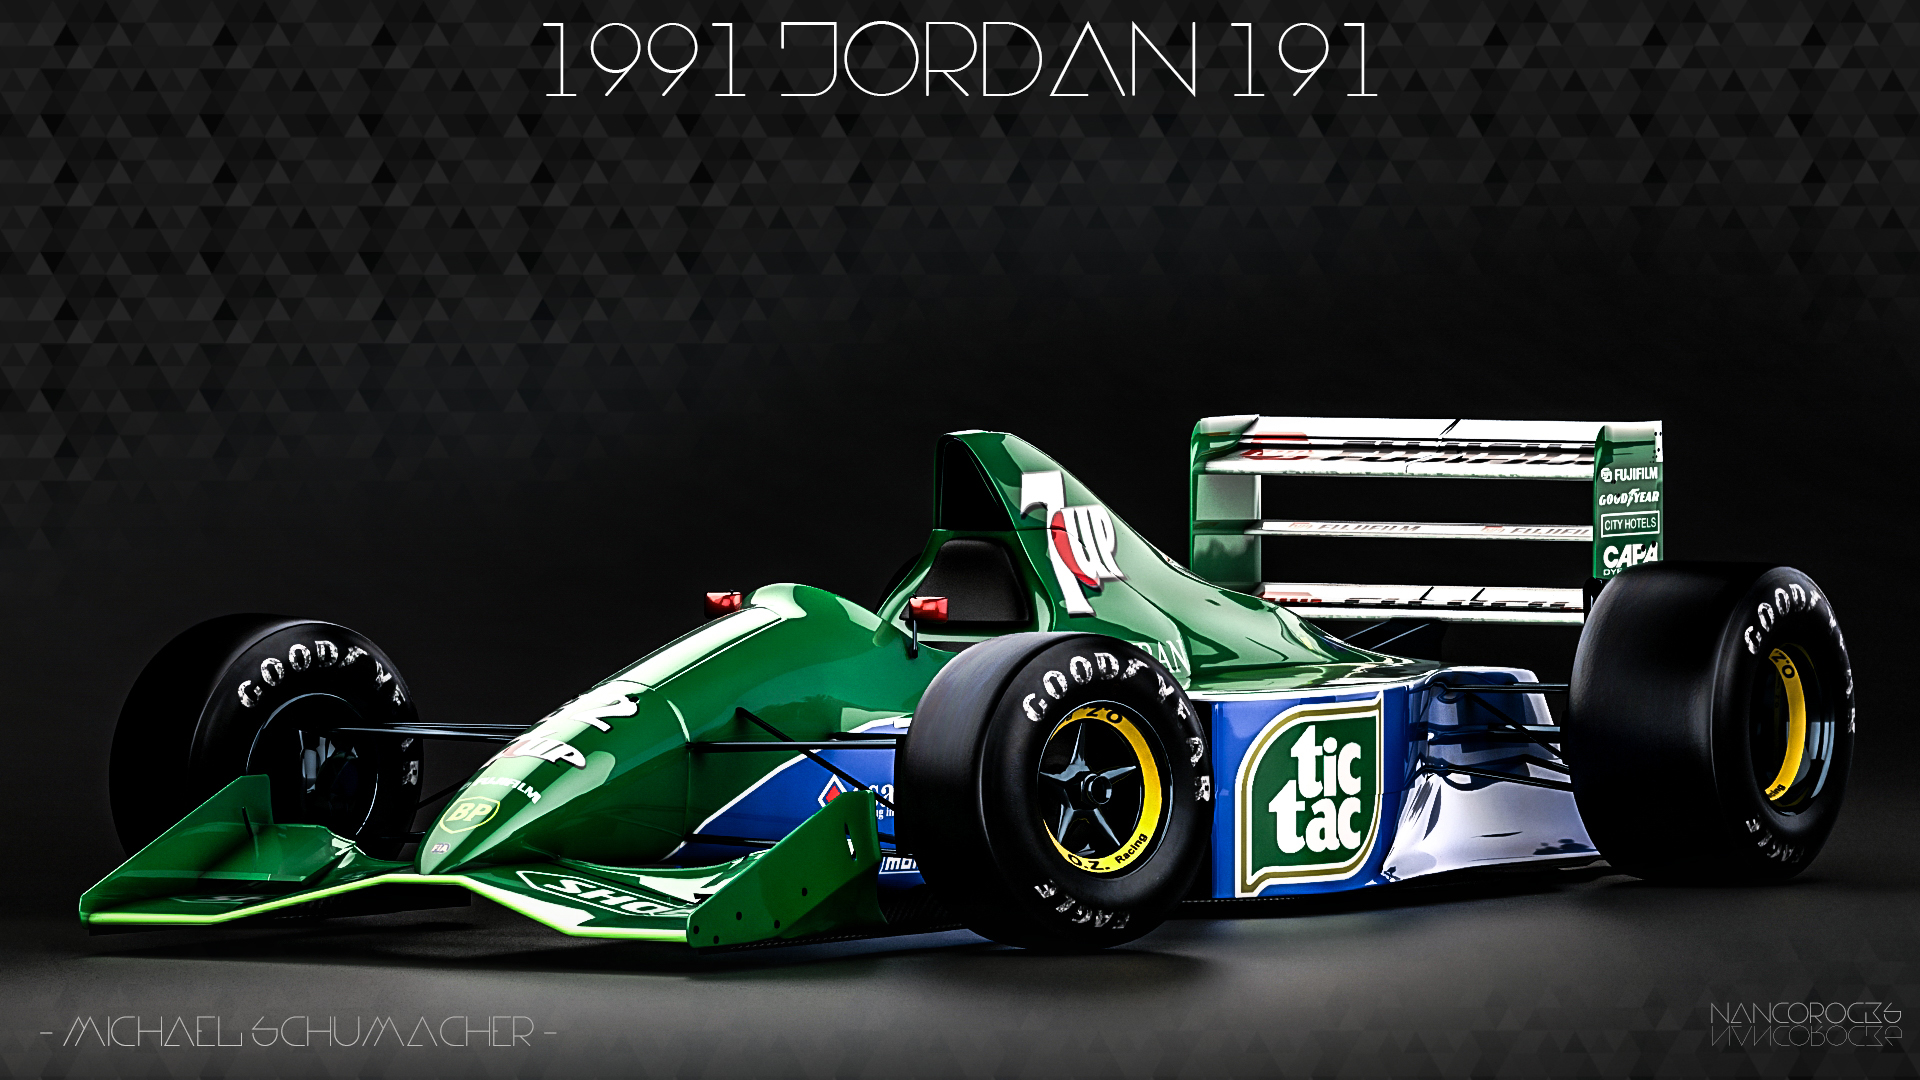 1991 Jordan 191 Schumacher - by nancorocks on